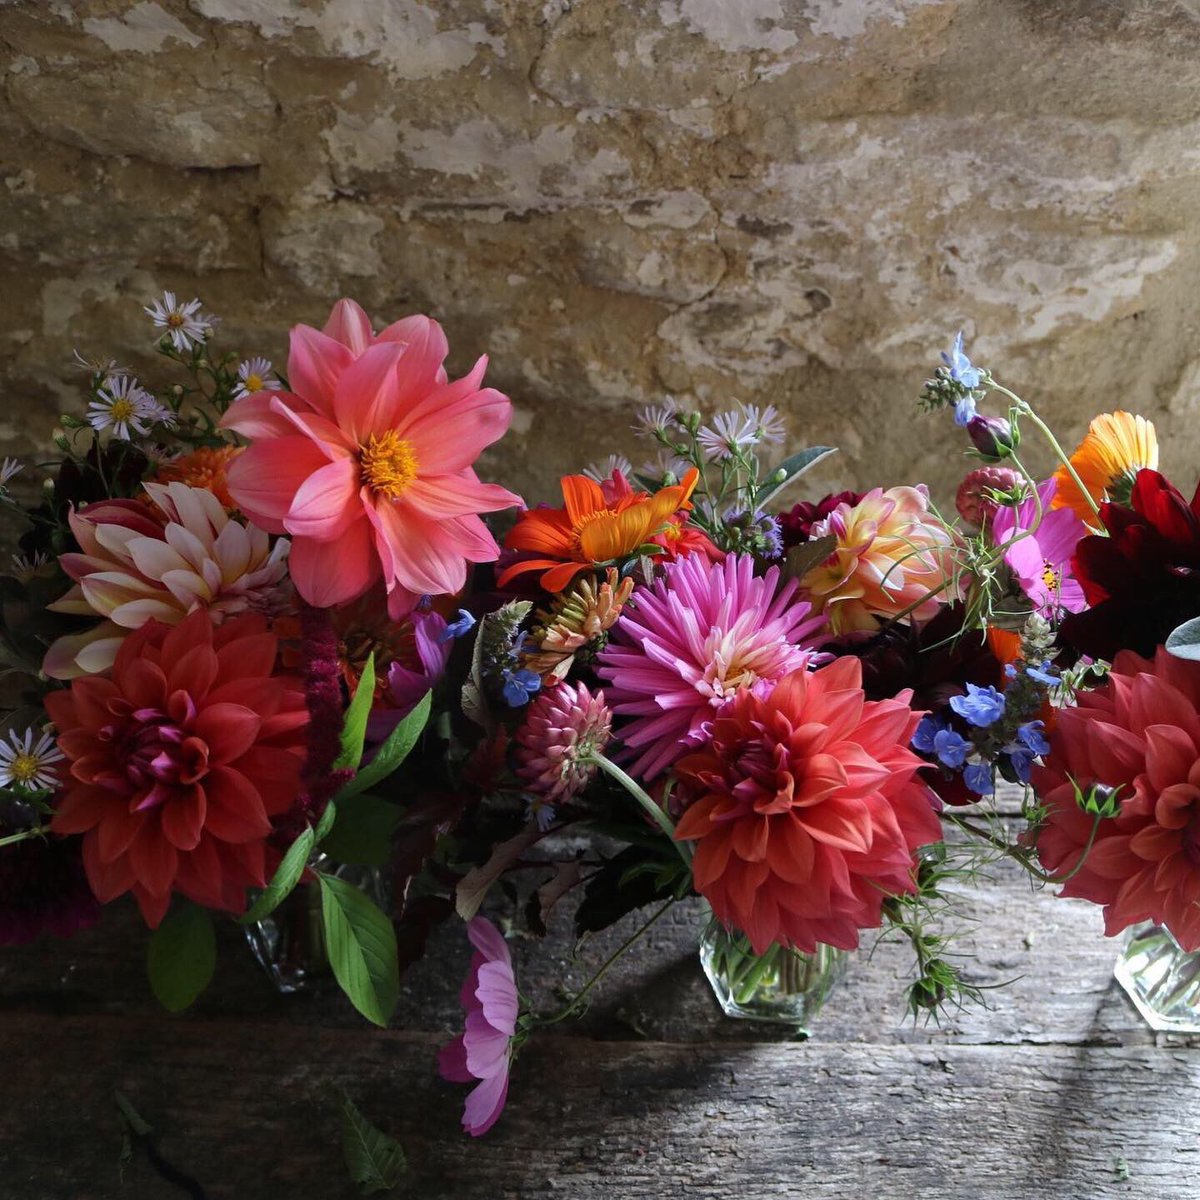 Mid week #somersetwedding: one bouquet, three posies, 9 buttonholes, 24 guests, ALL the chic. #weddingwednesday #britishflowers #mygardenrightnow #somersetflowers #somersetflorist